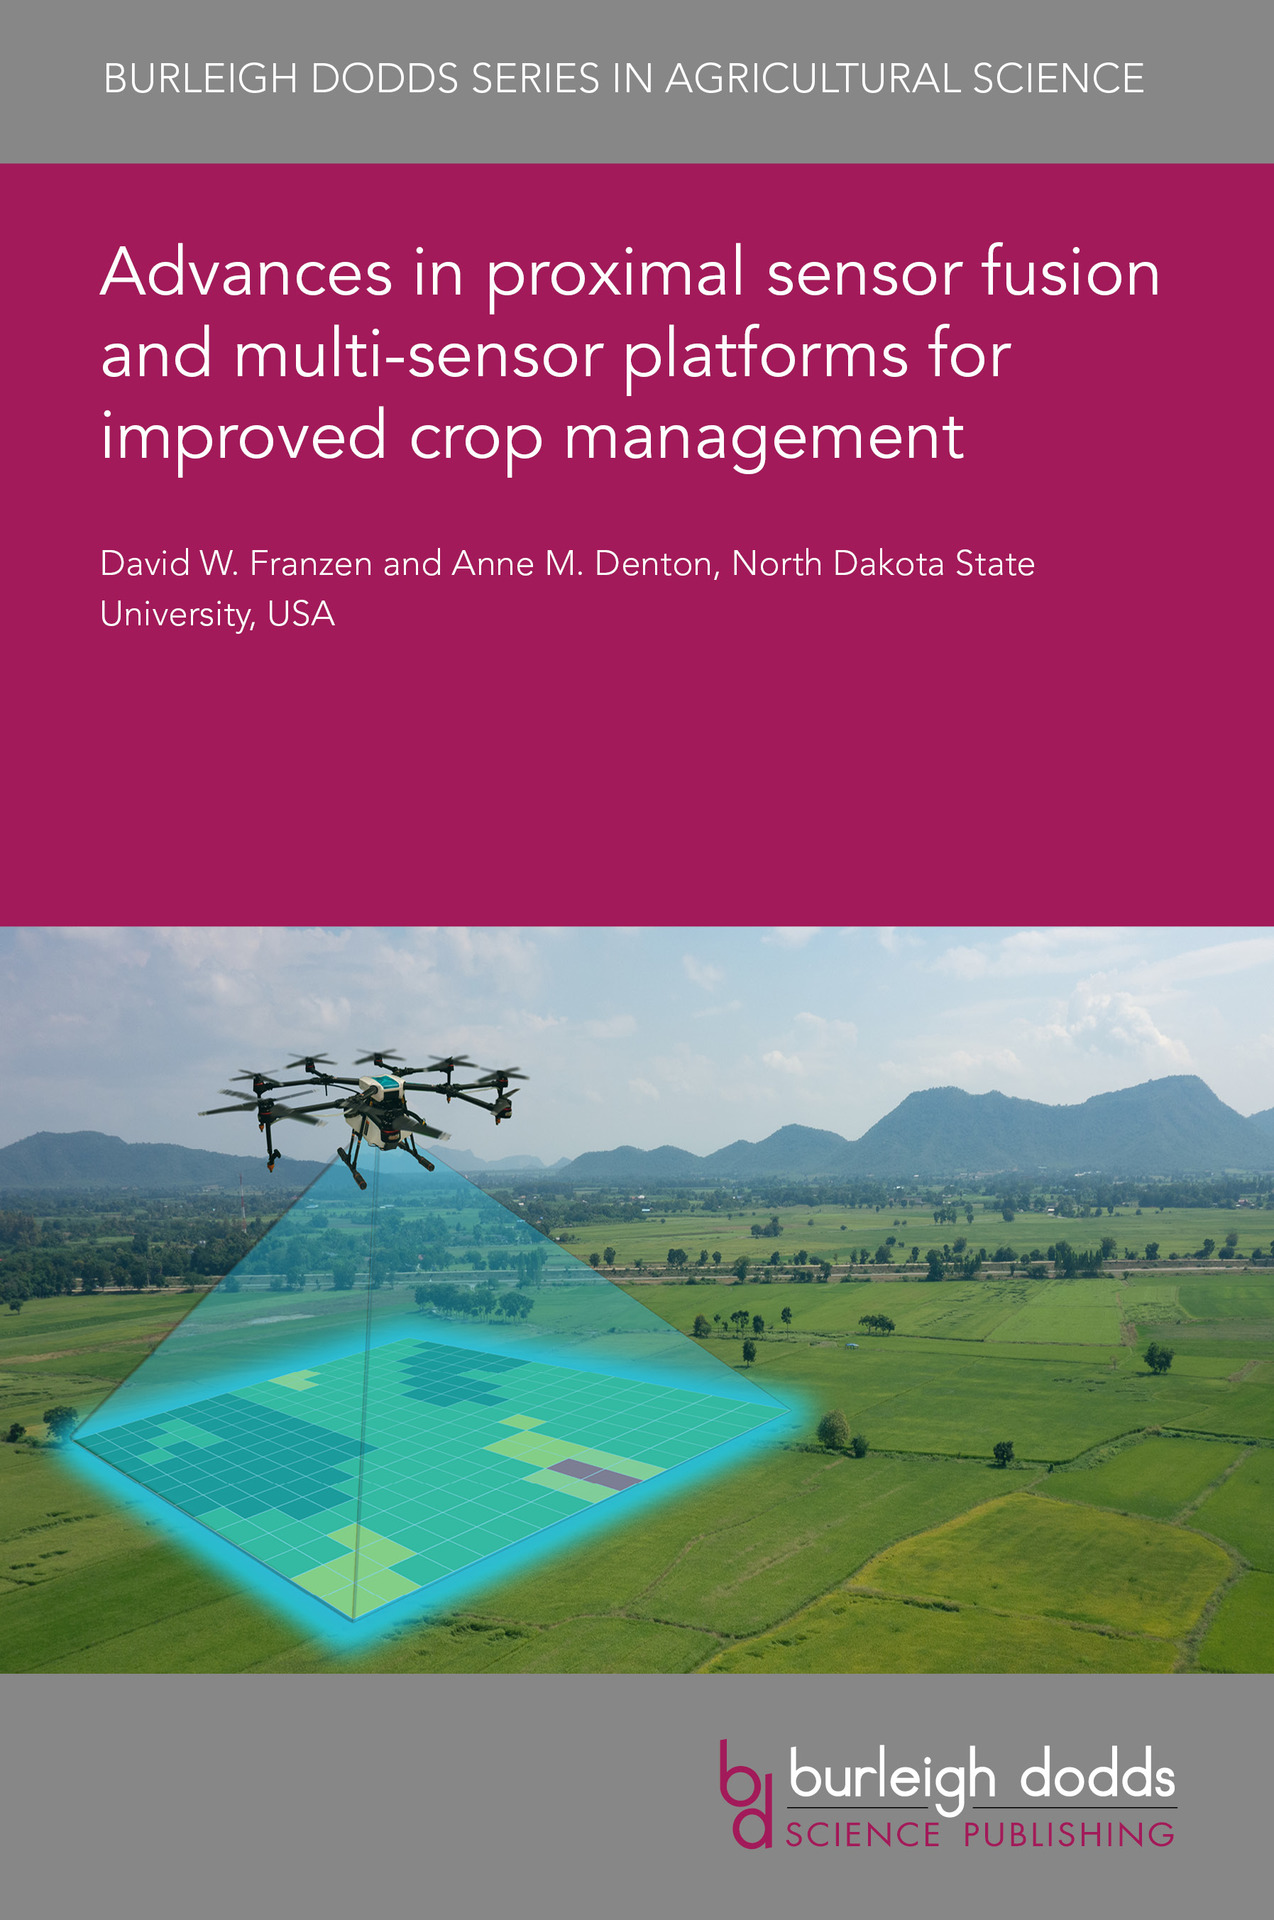 Advances in proximal sensor fusion and multi-sensor platforms for improved crop management